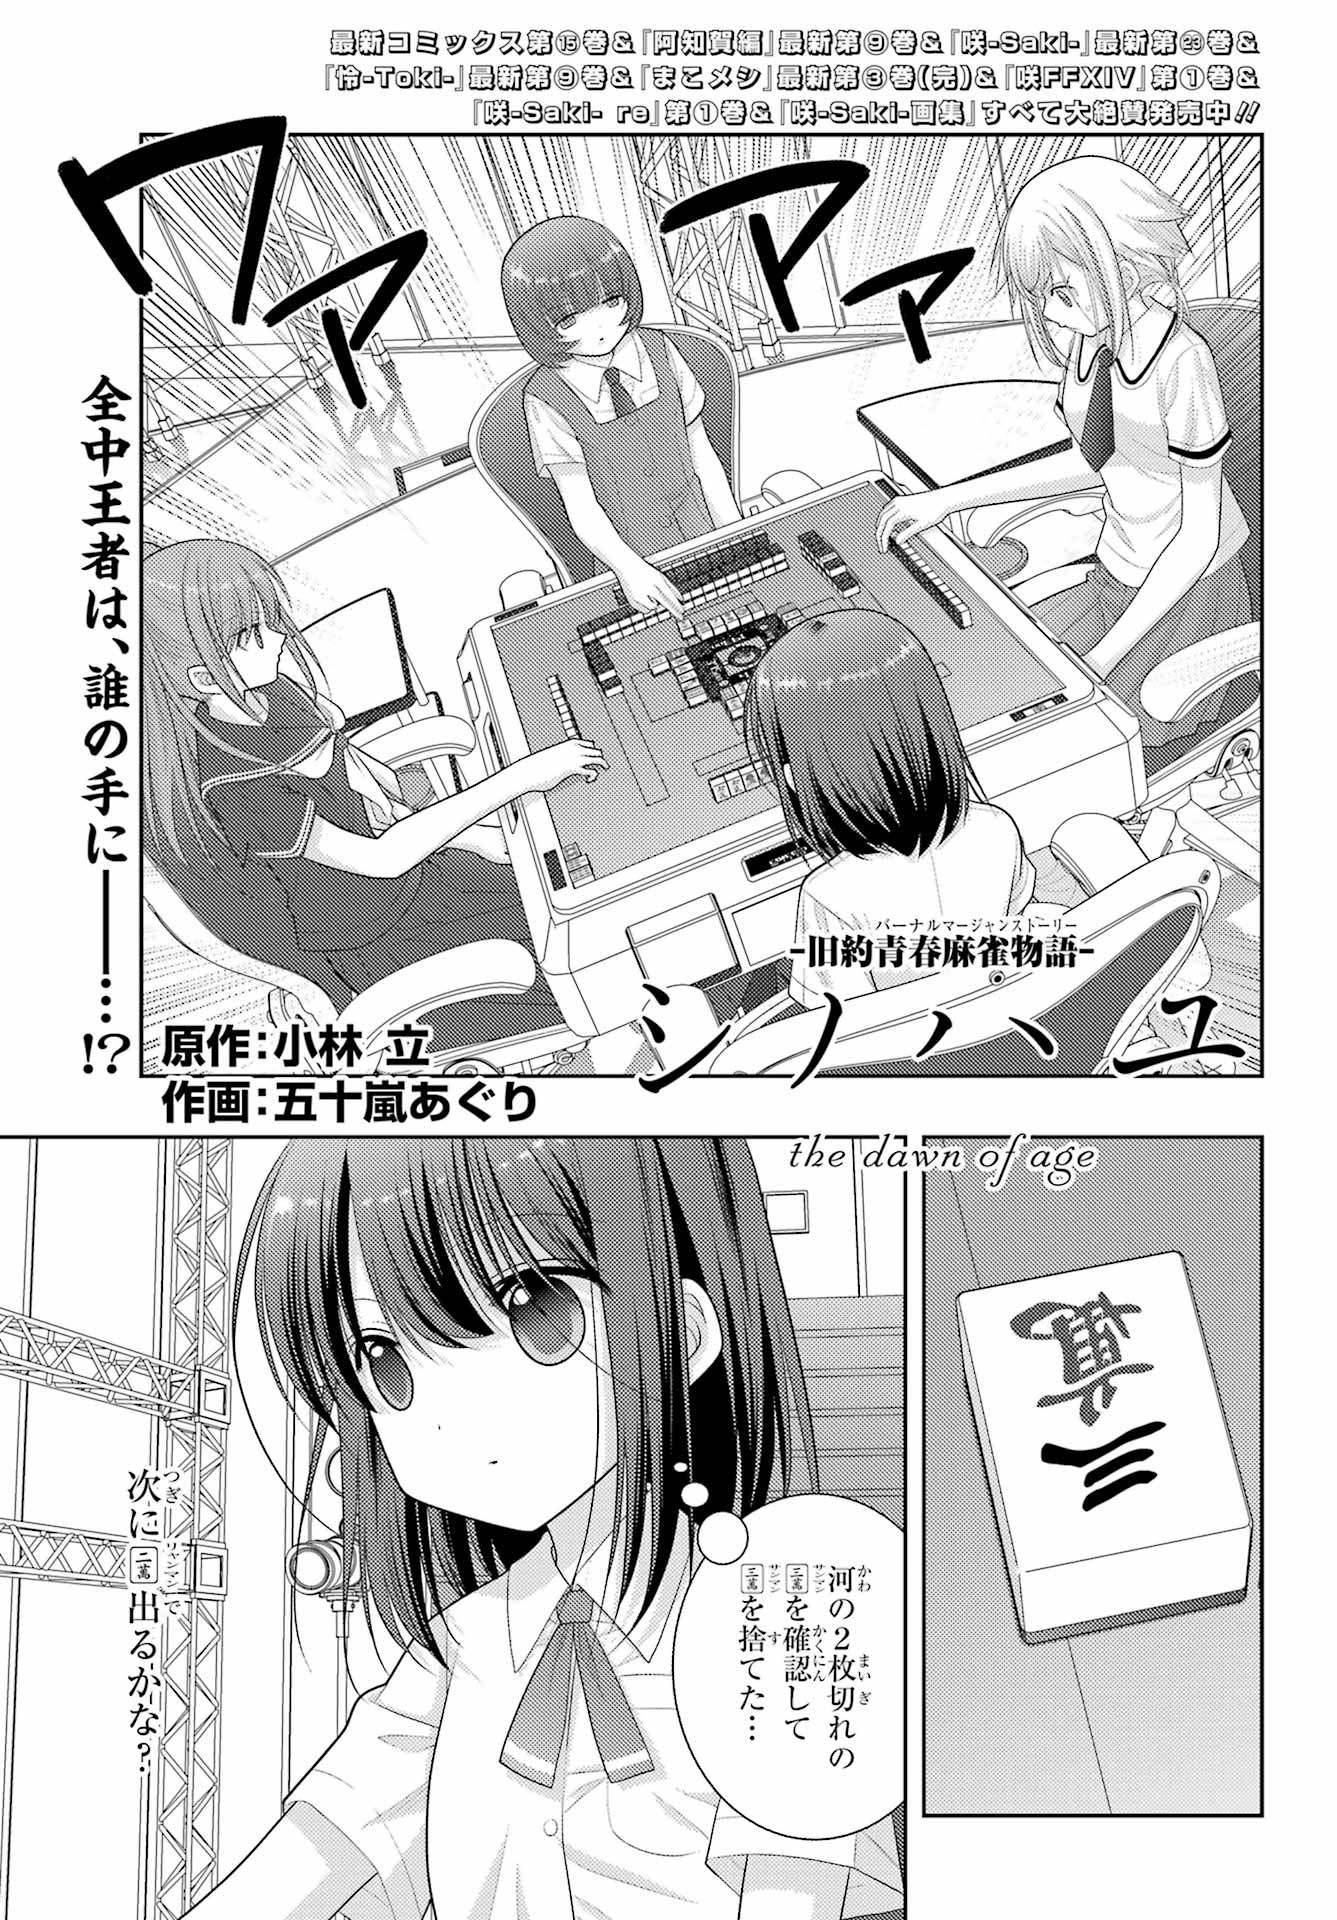 Shinohayu - The Dawn of Age Manga - Chapter 099 - Page 1